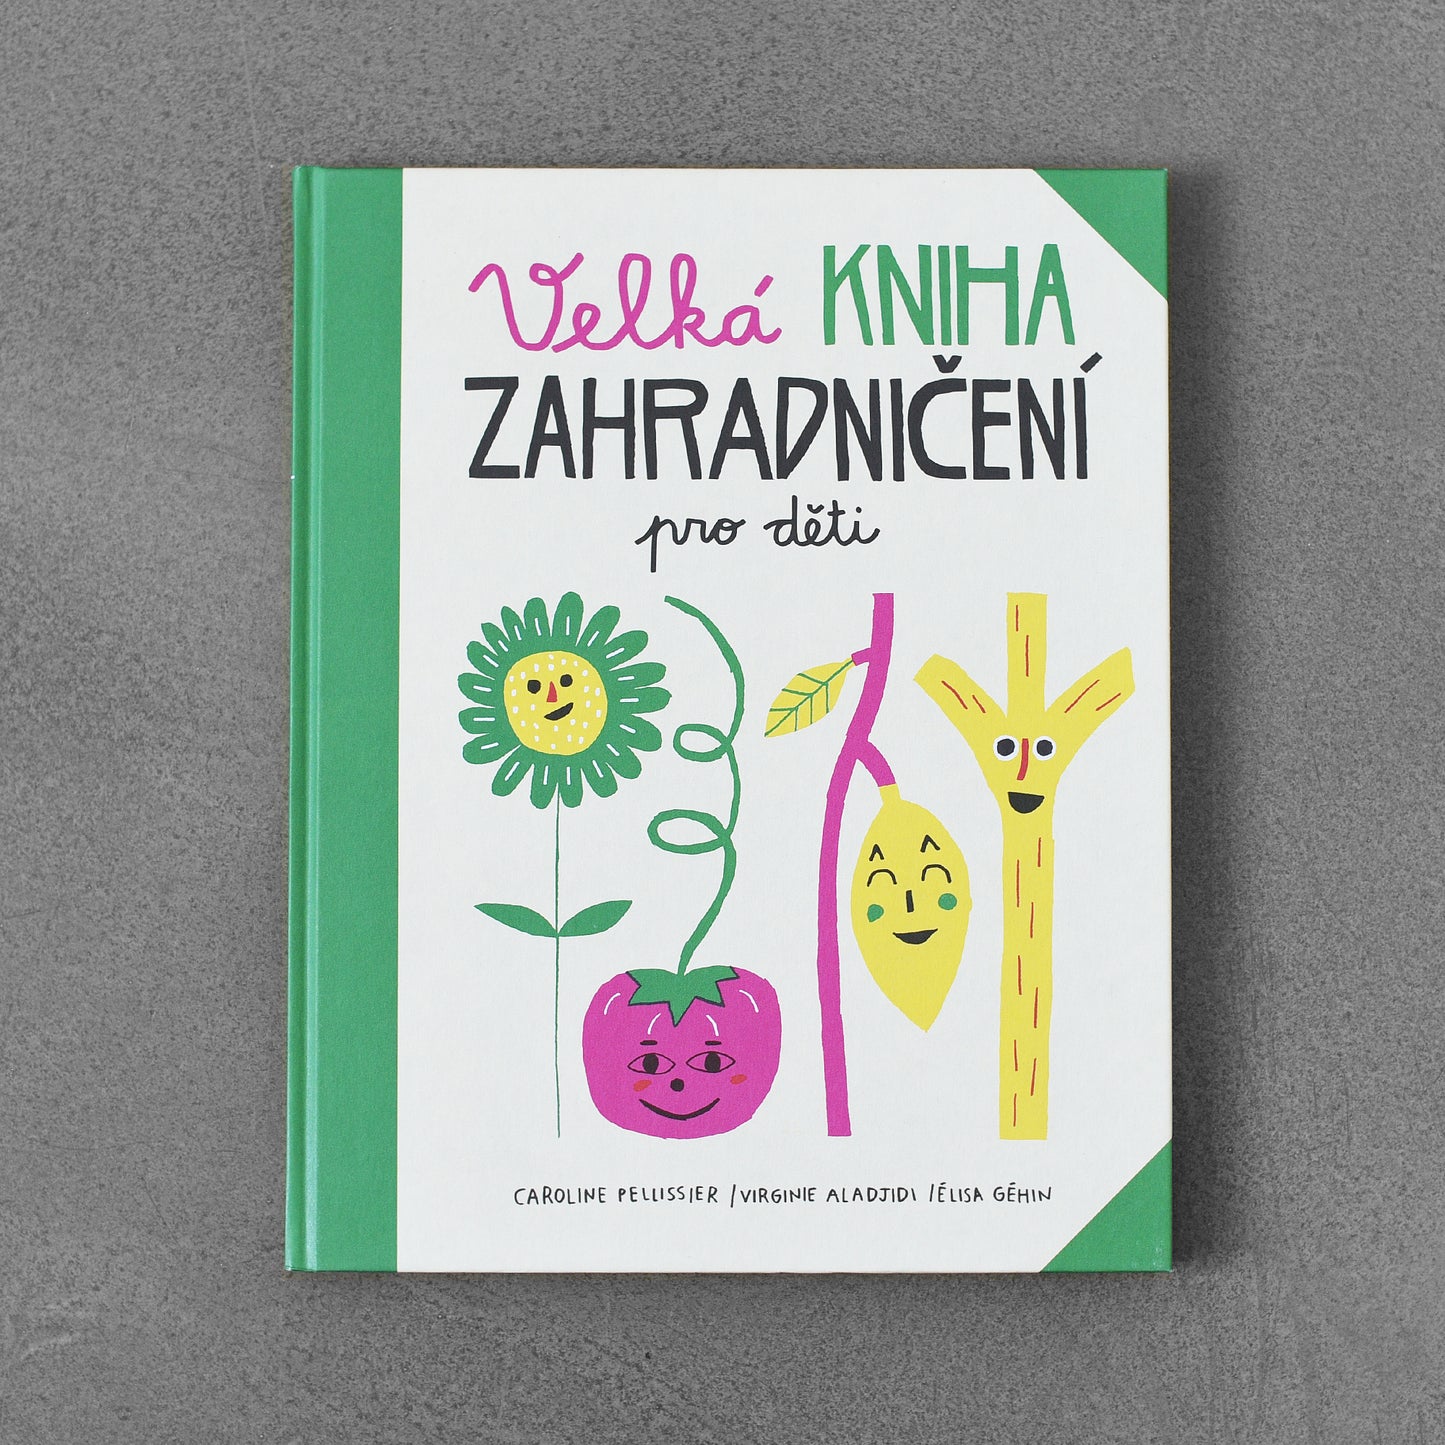 Velká kniha zahradničení pro děti - Caroline Pellissier / Virginie Aladjidi / Élisa Géhin